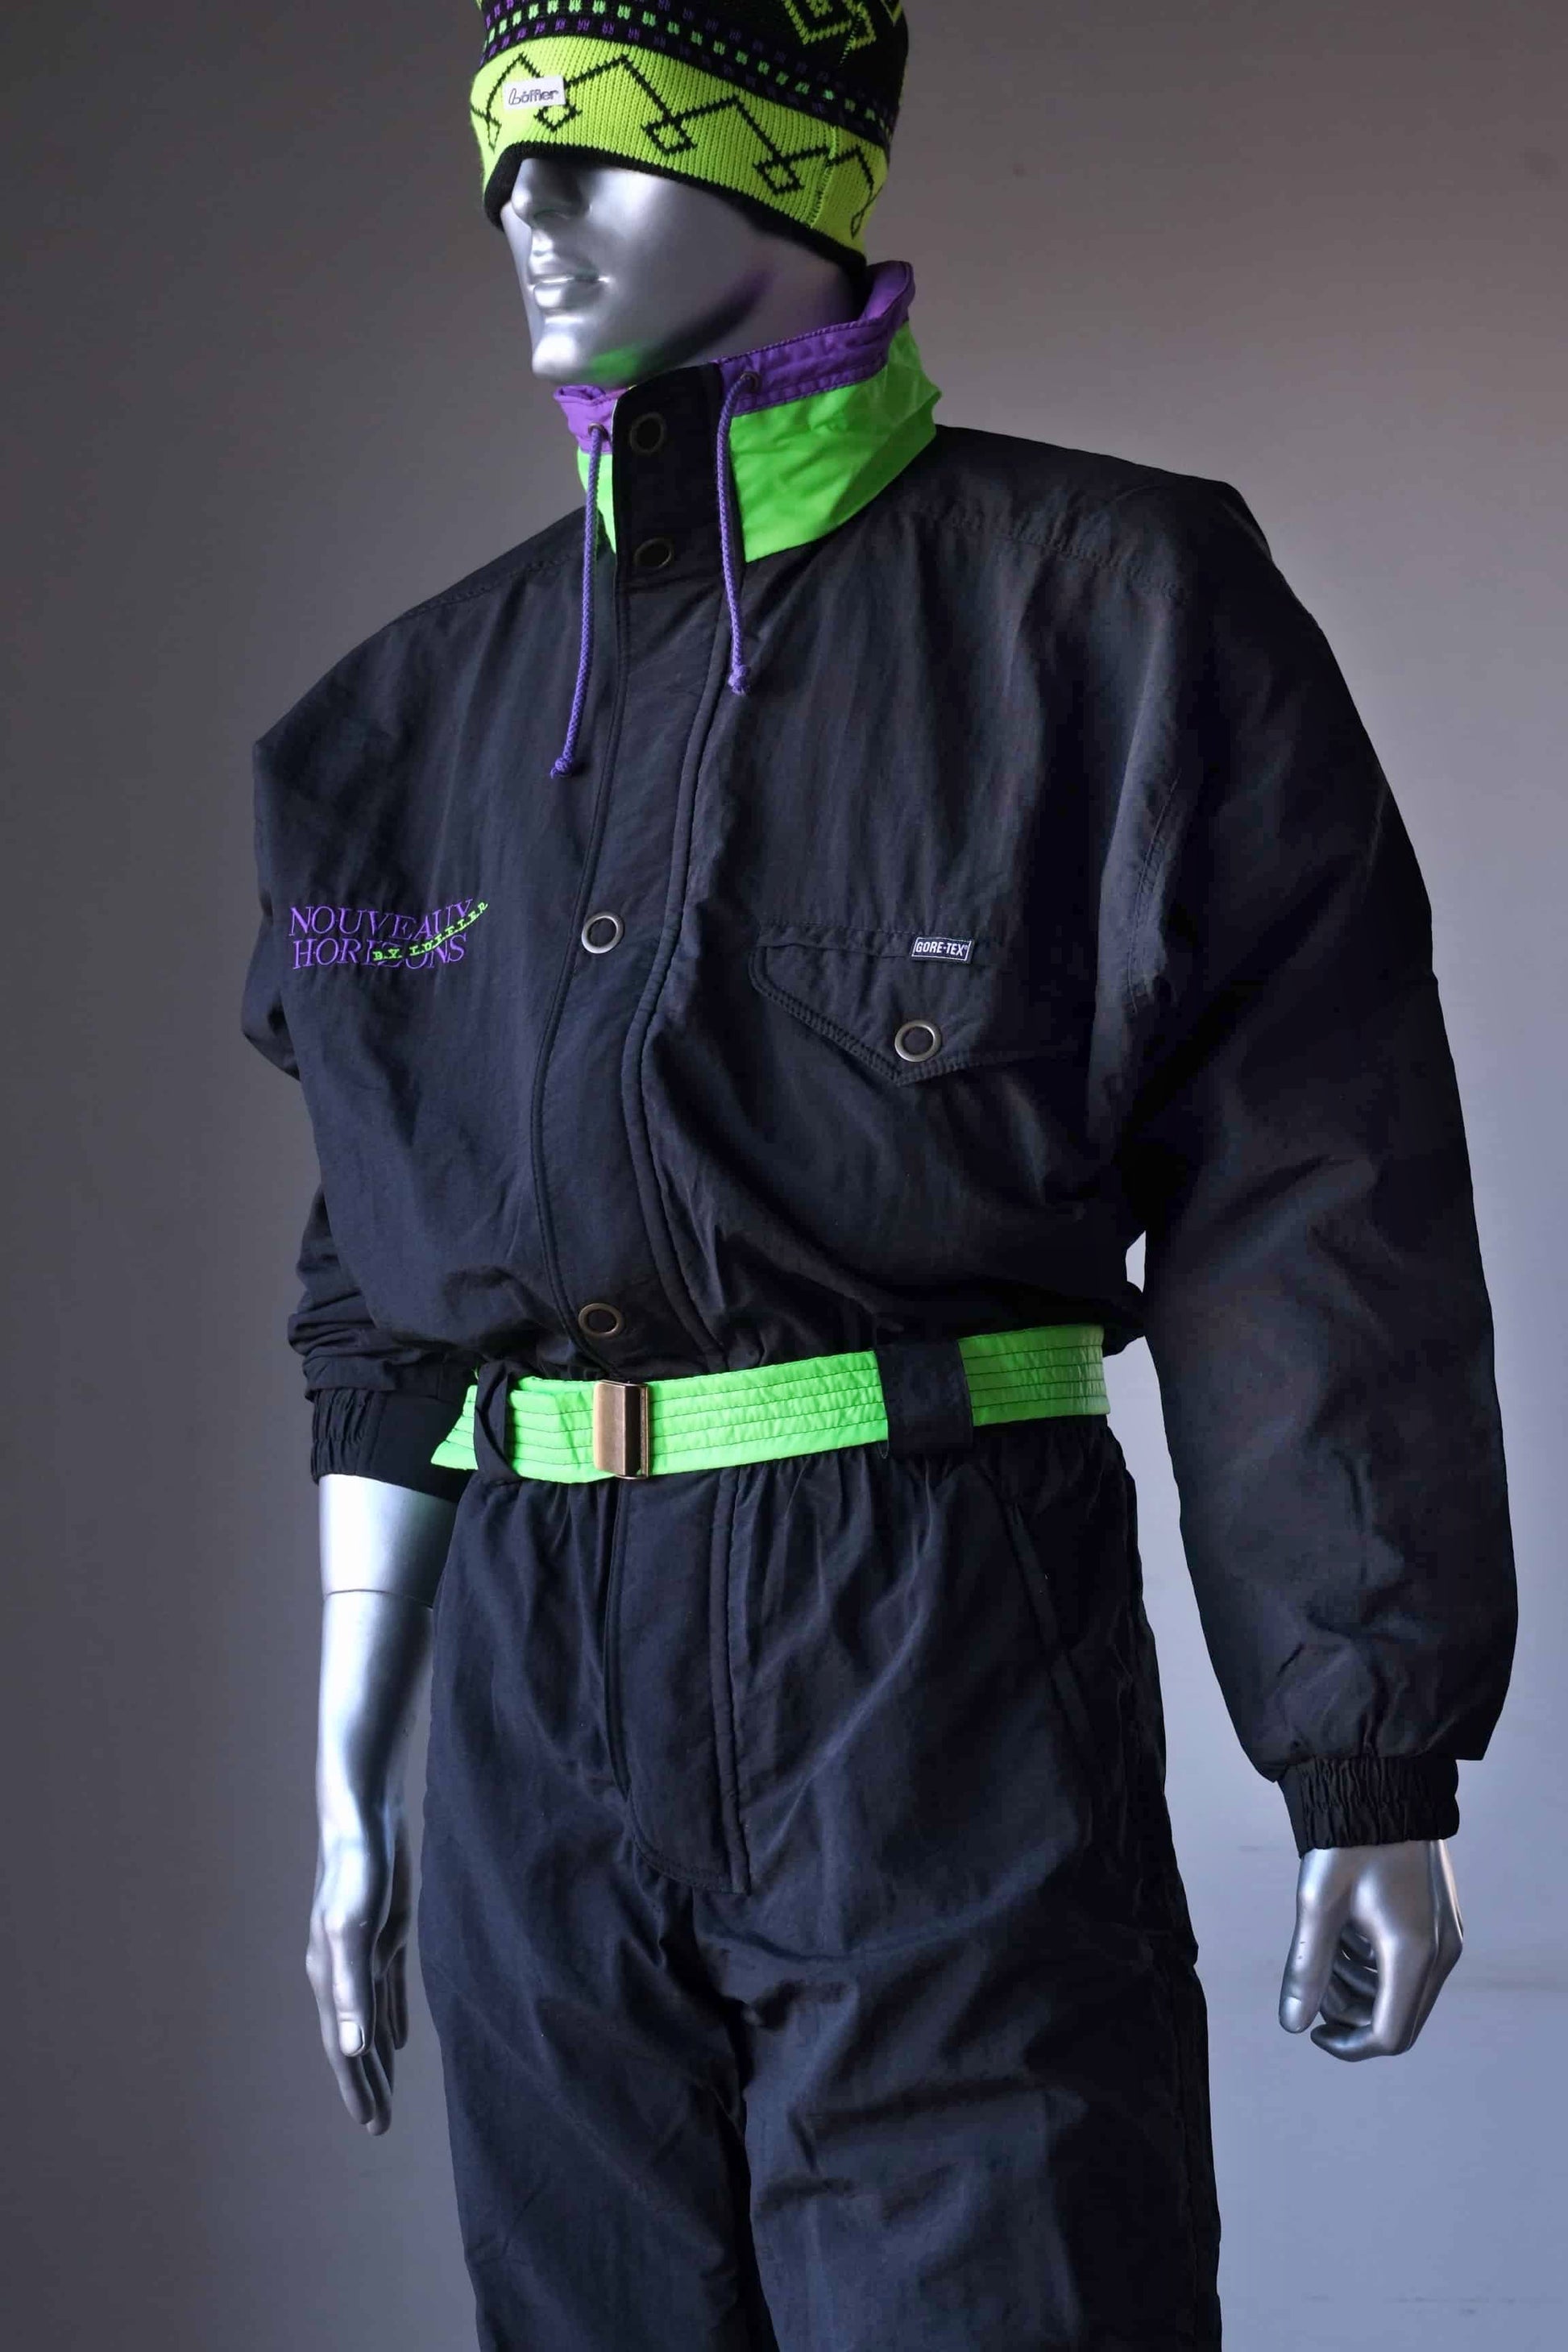 Vintage Early 90's Men's Ski Suit black